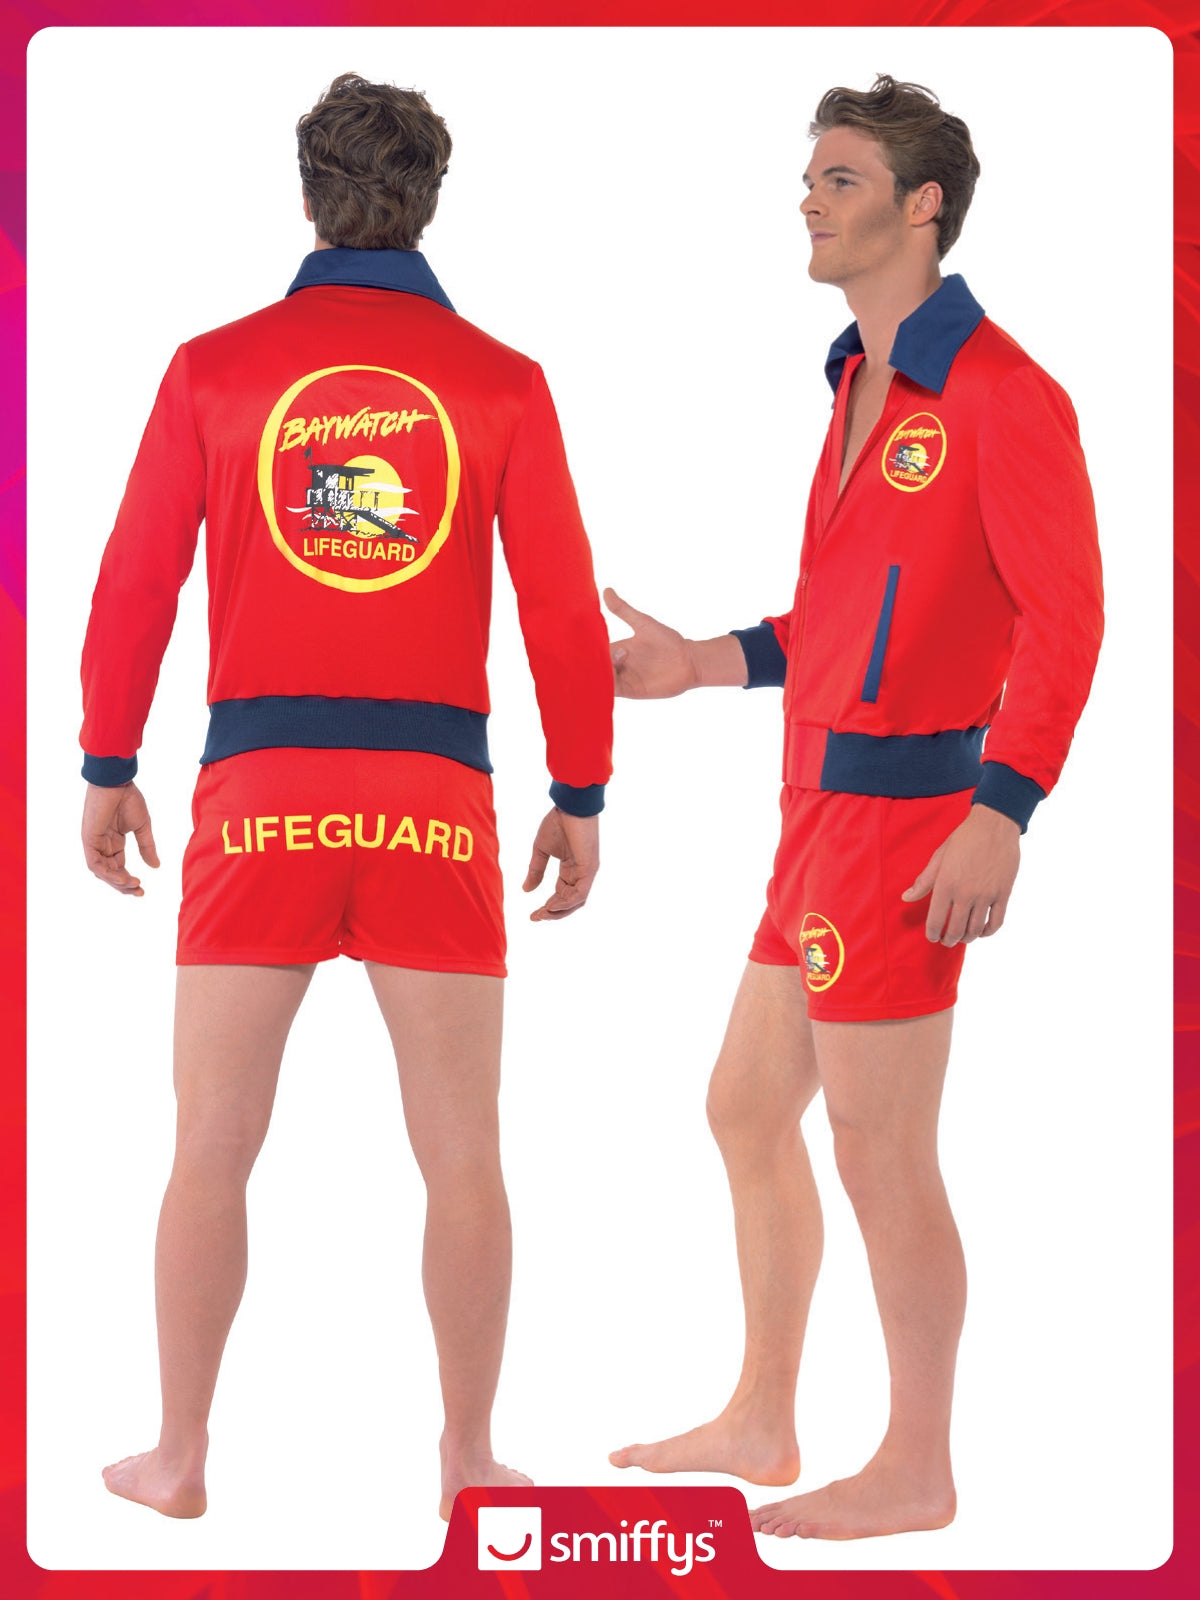 Baywatch Lifeguard Costume 4